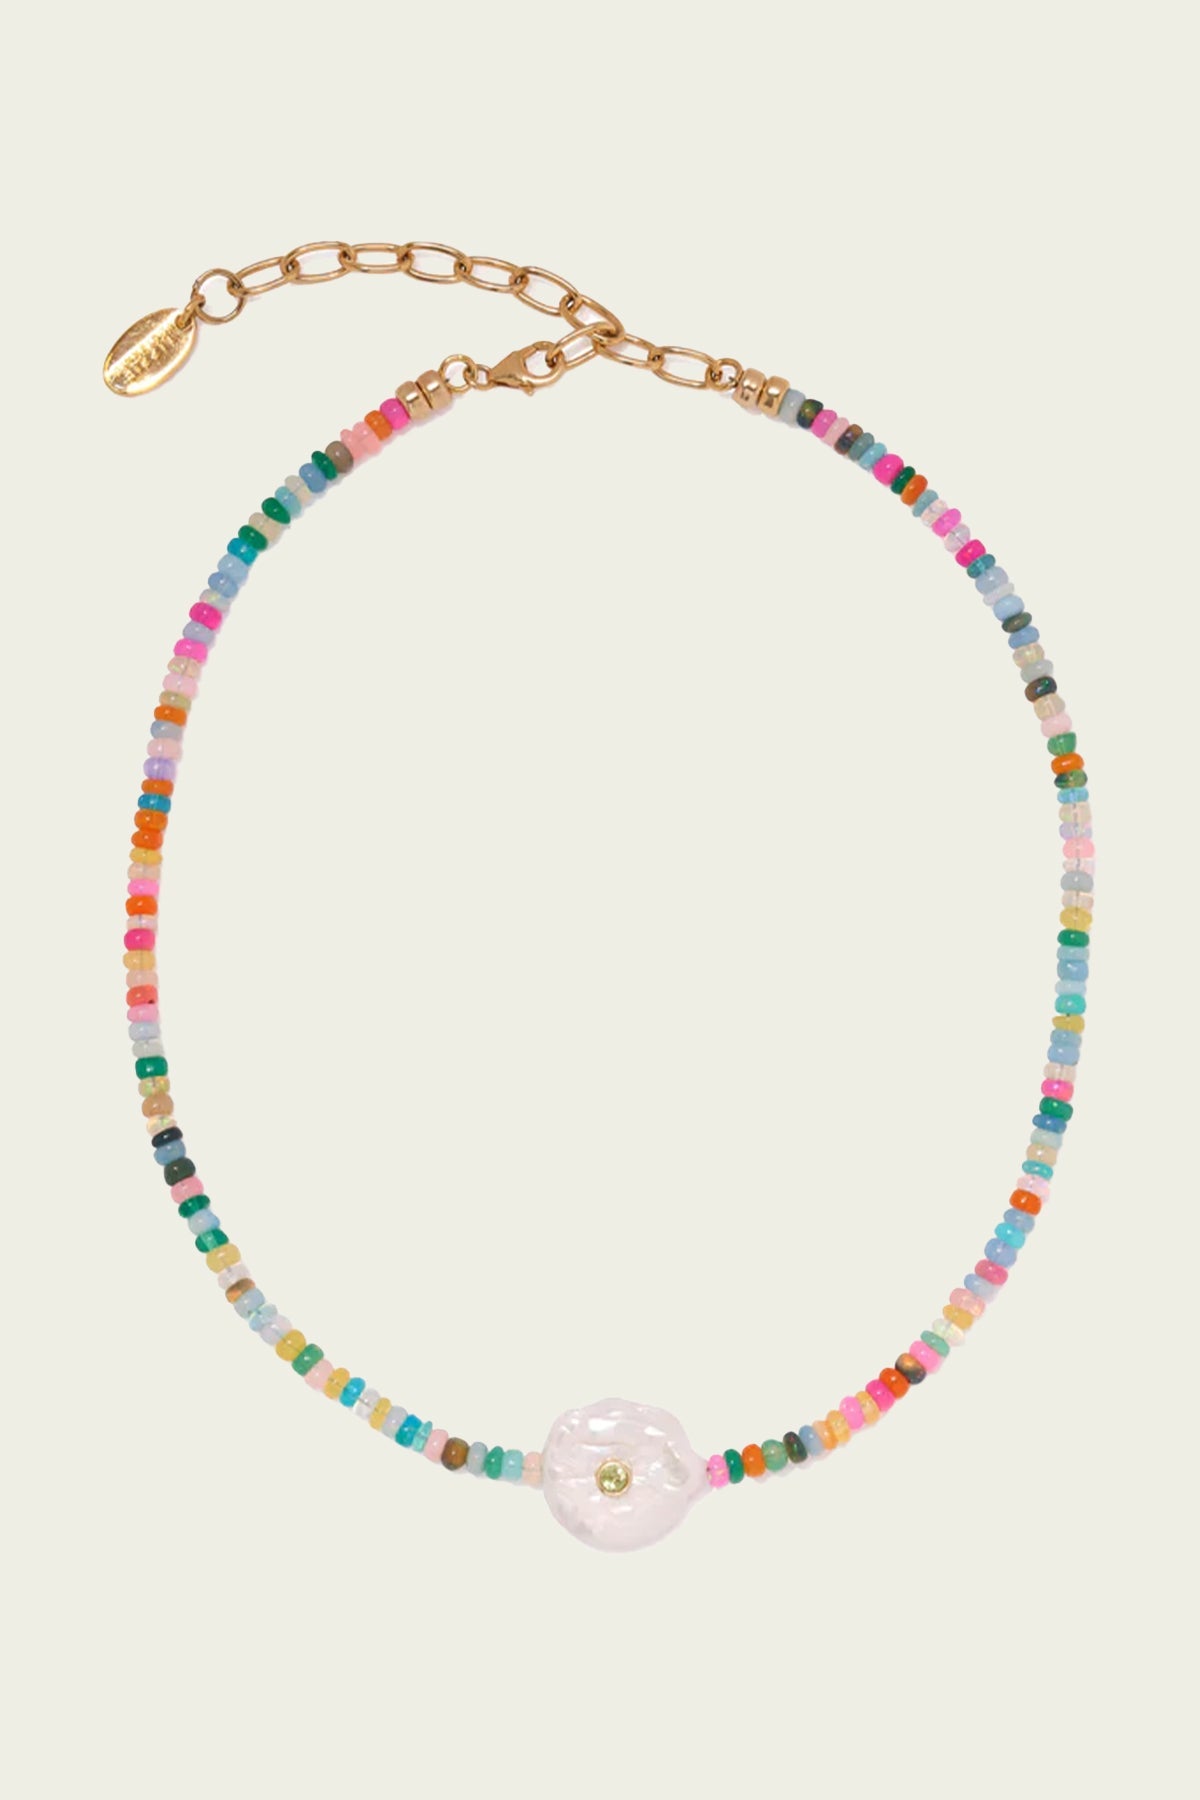 Destination Necklace in Rainbow Opal - shop-olivia.com